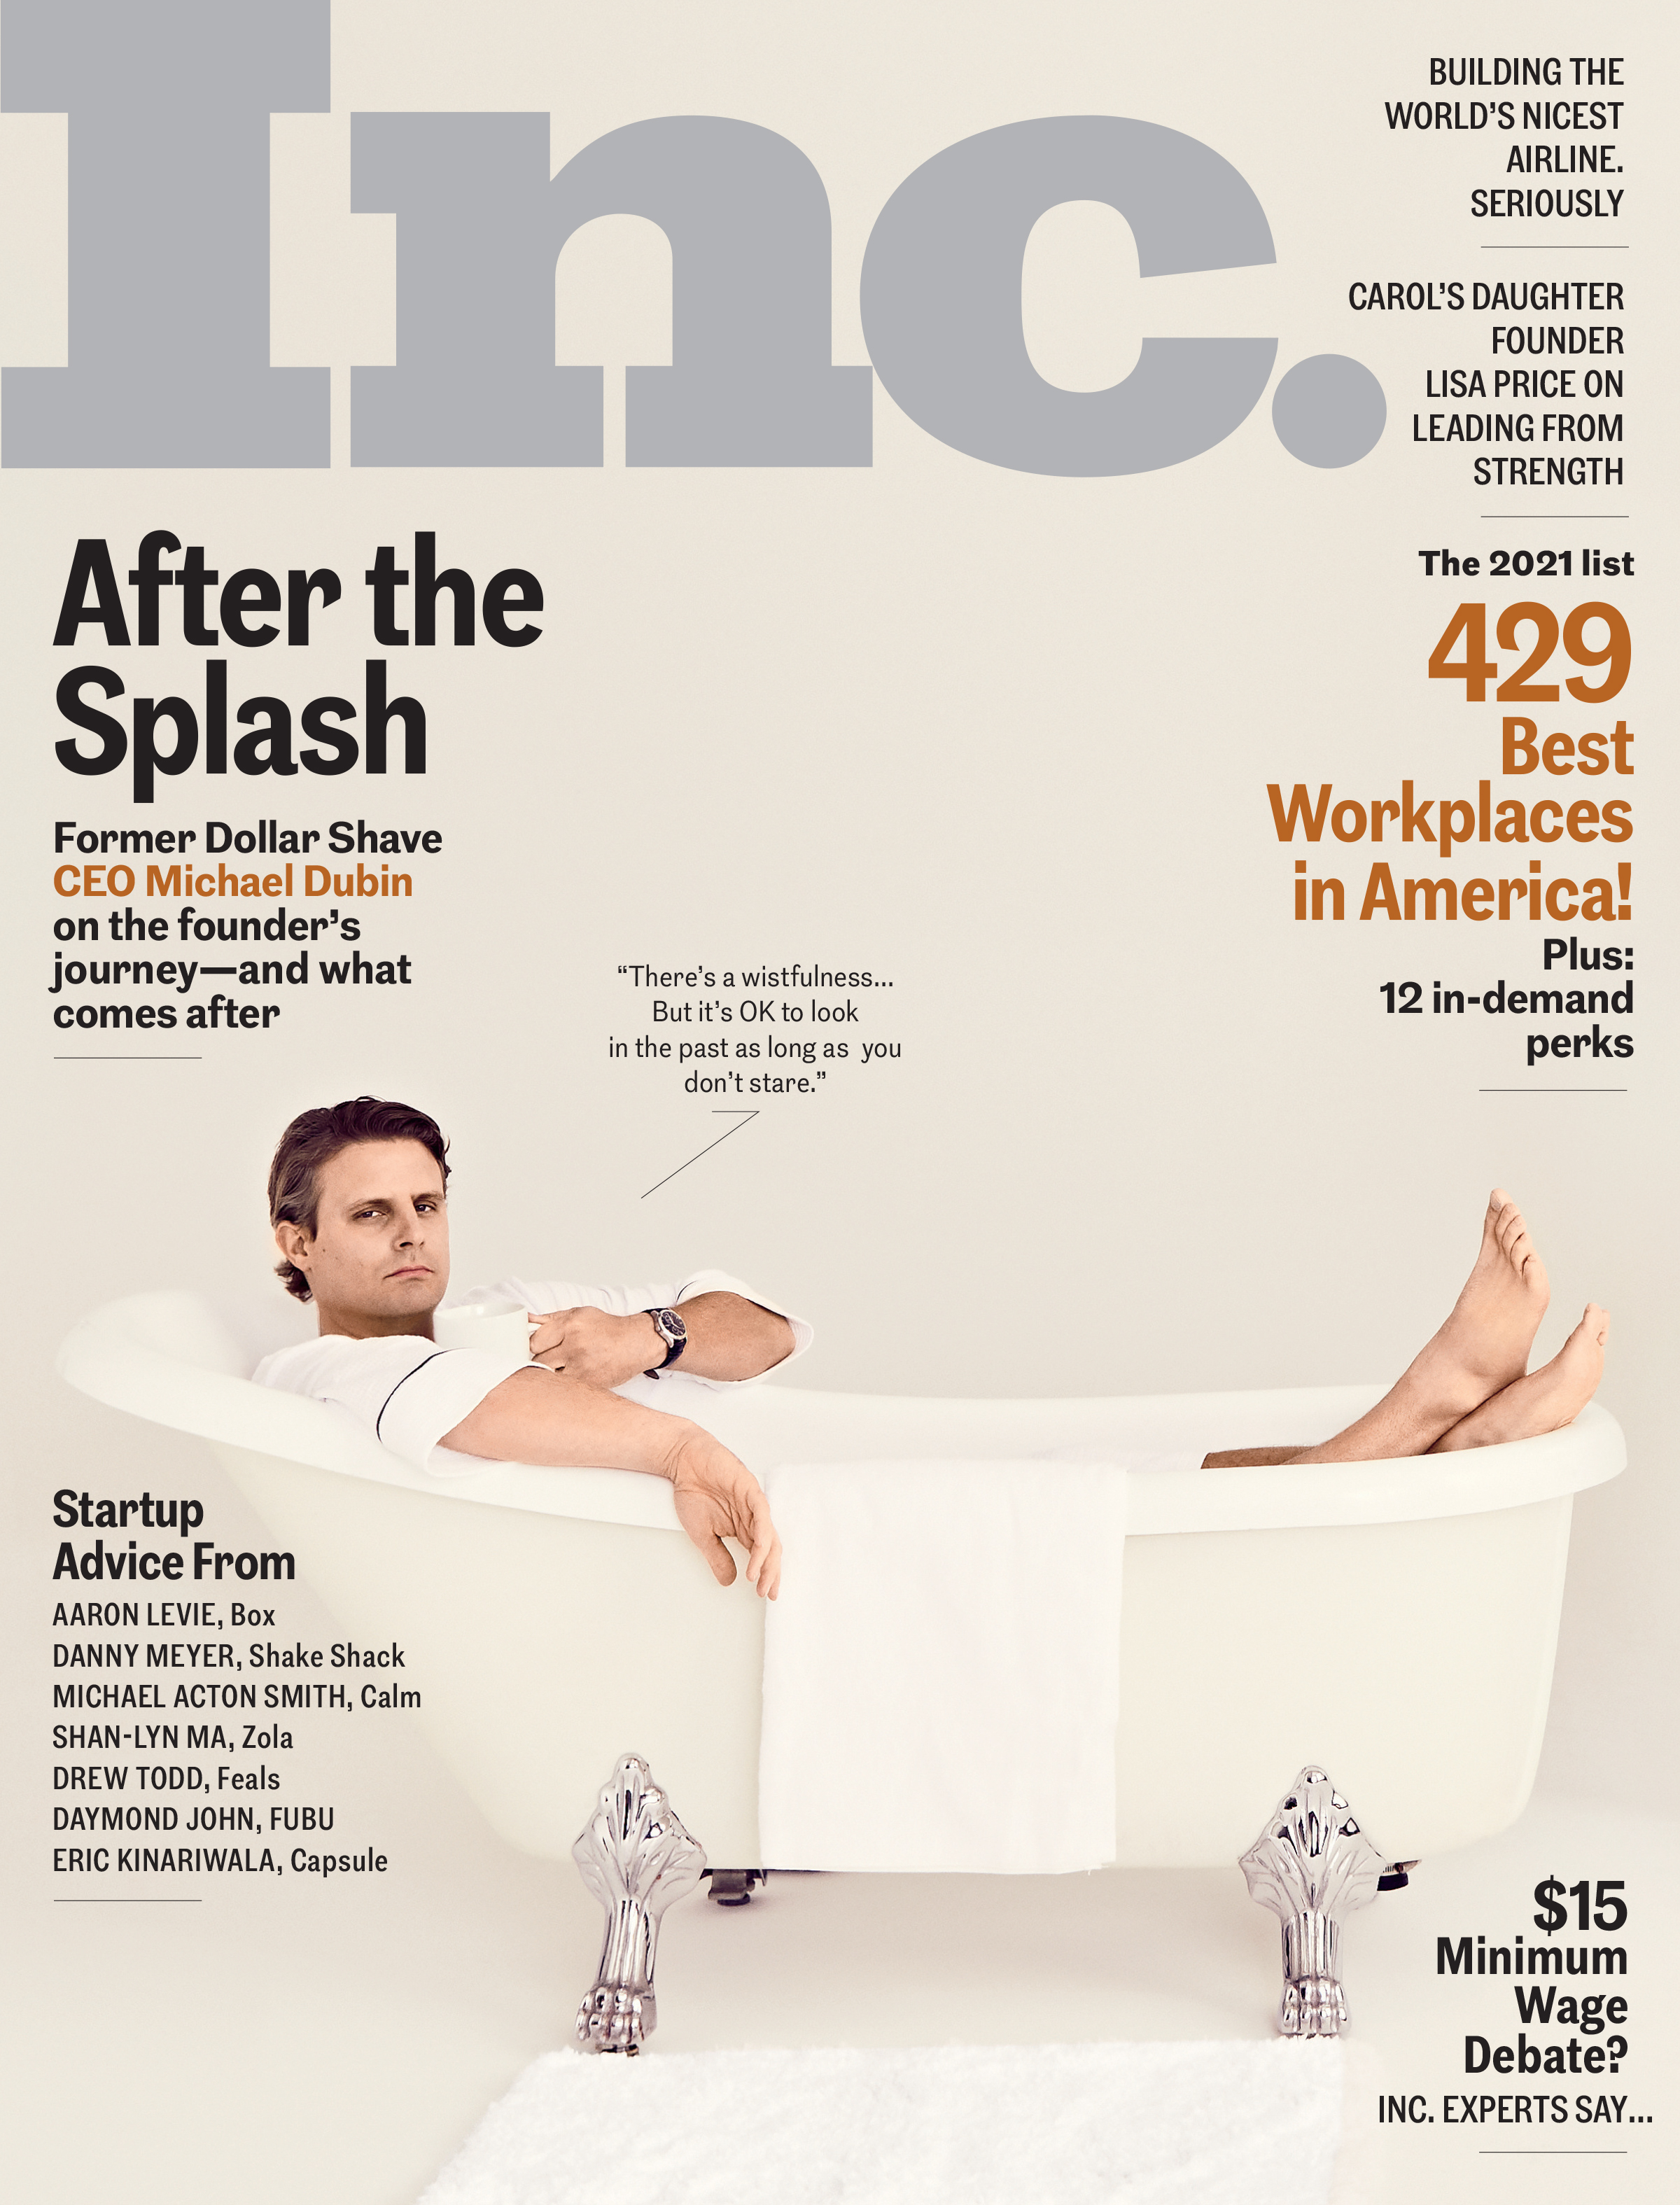 Inc. Magazine Cover